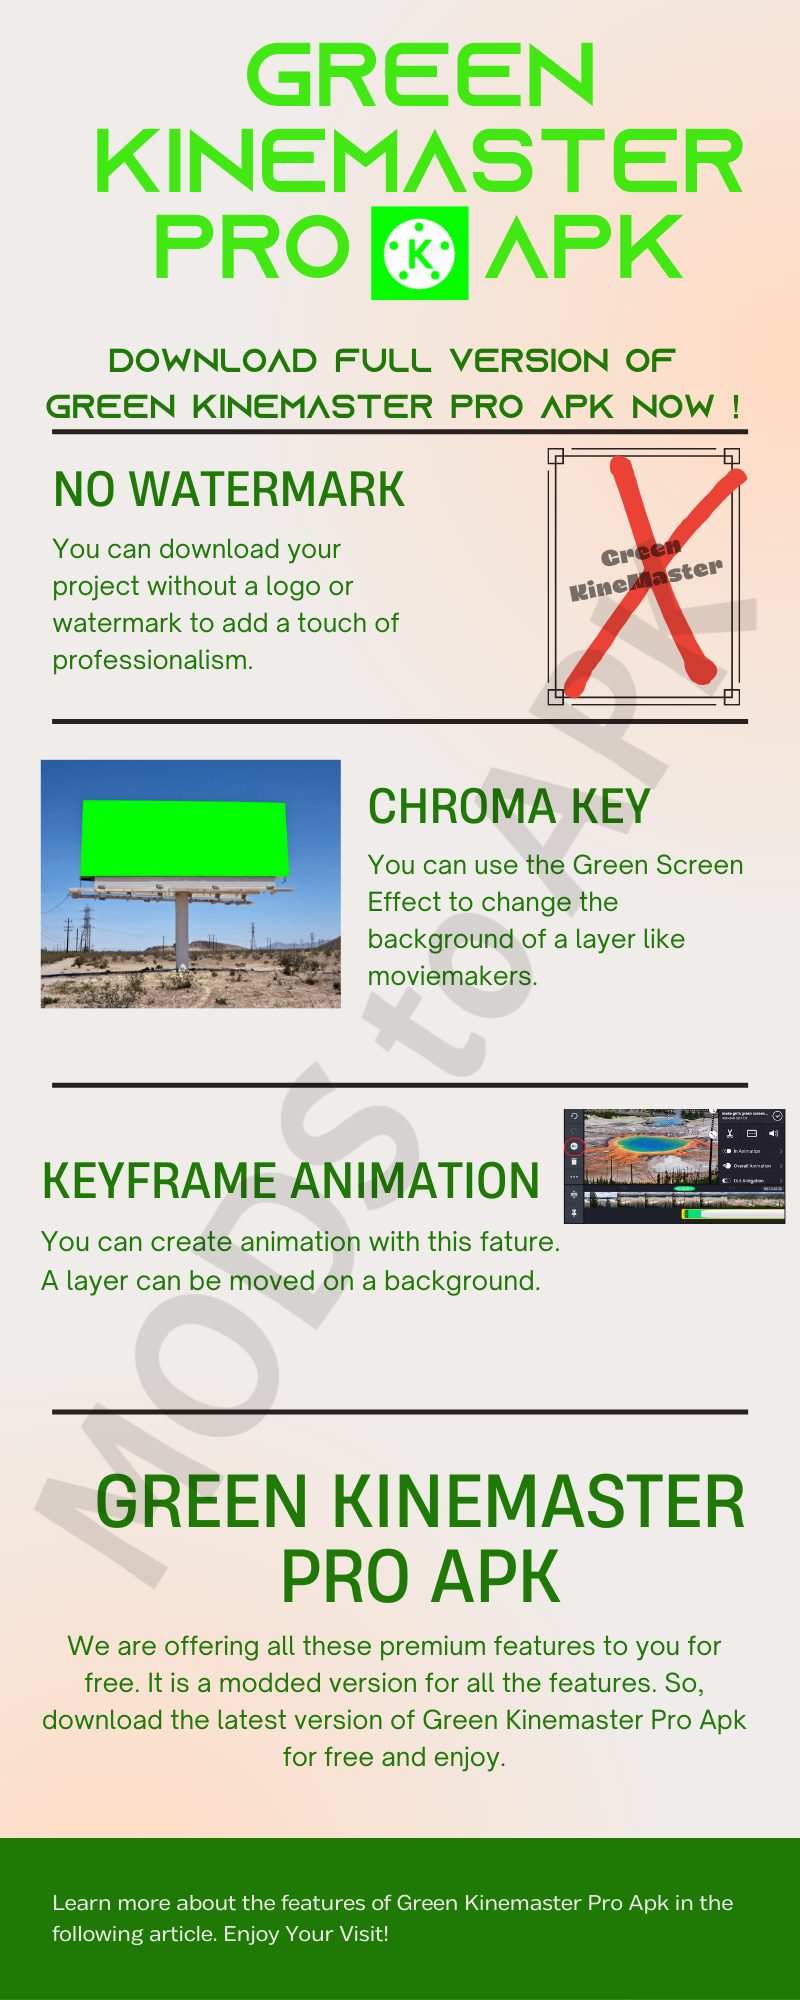 kinemaster no watermark with chroma key